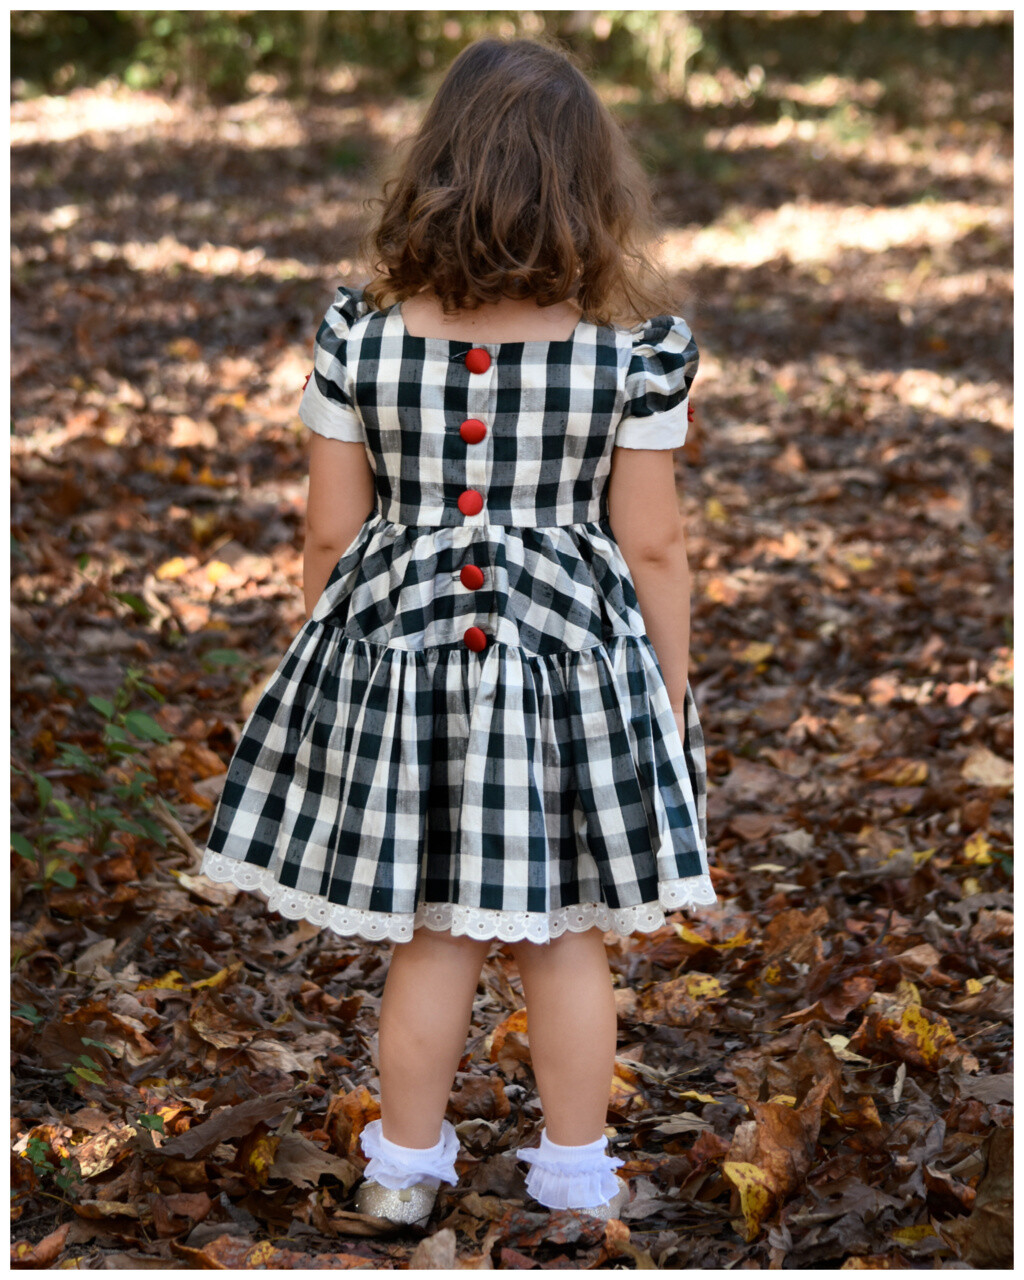 Kids & Childrens Dress Sewing Patterns